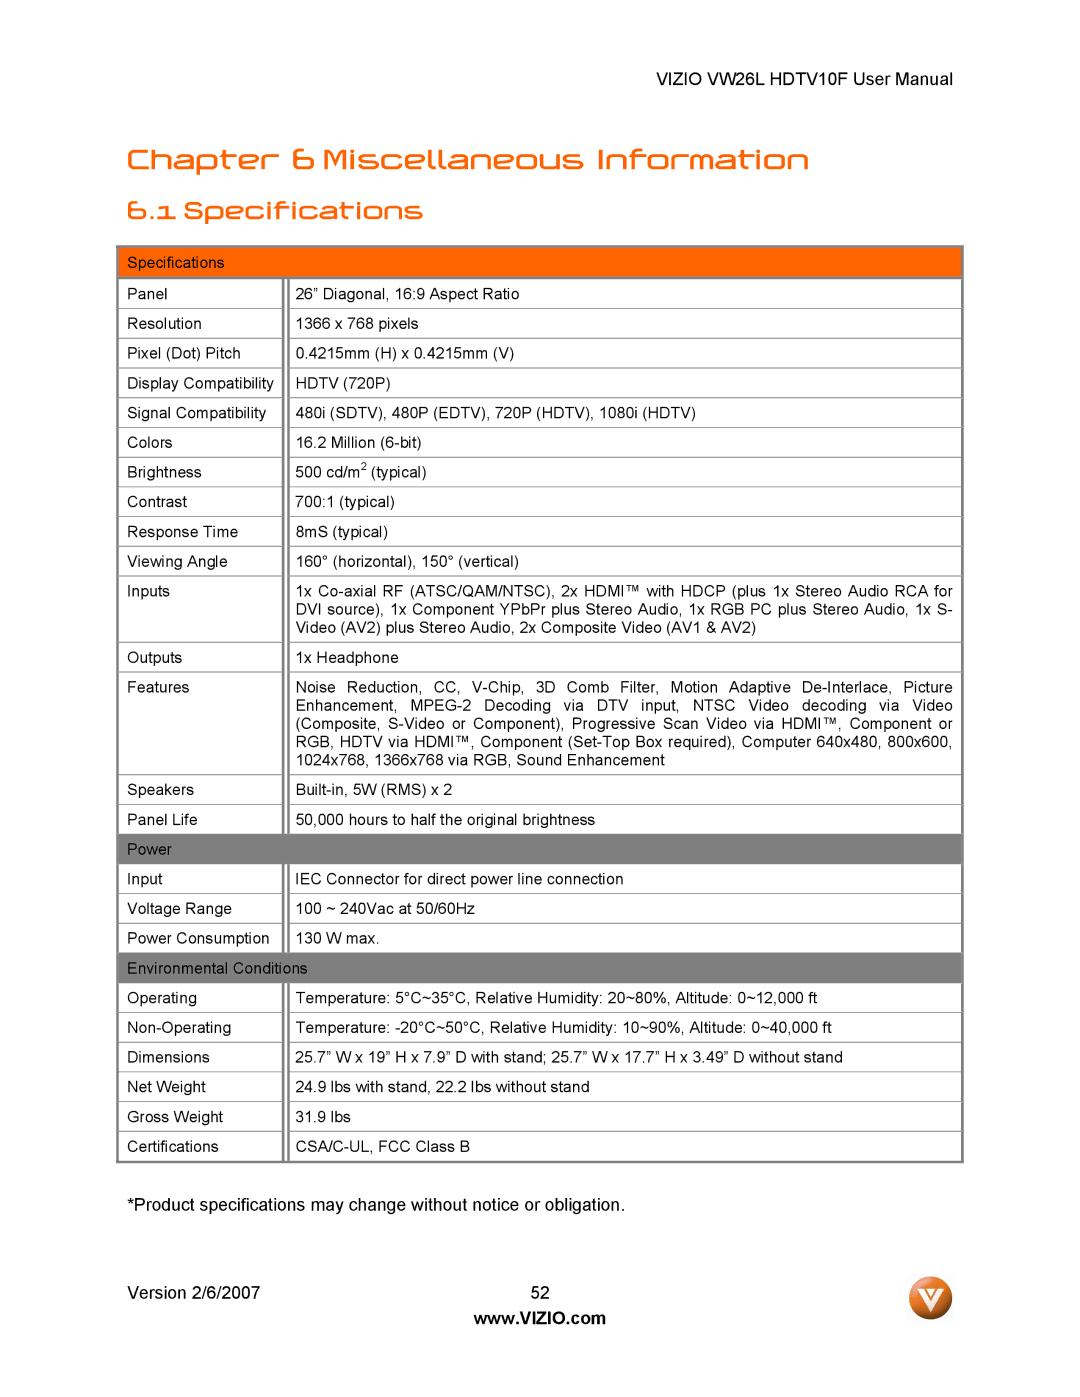 Vizio VW26L user manual Miscellaneous Information, Specifications 